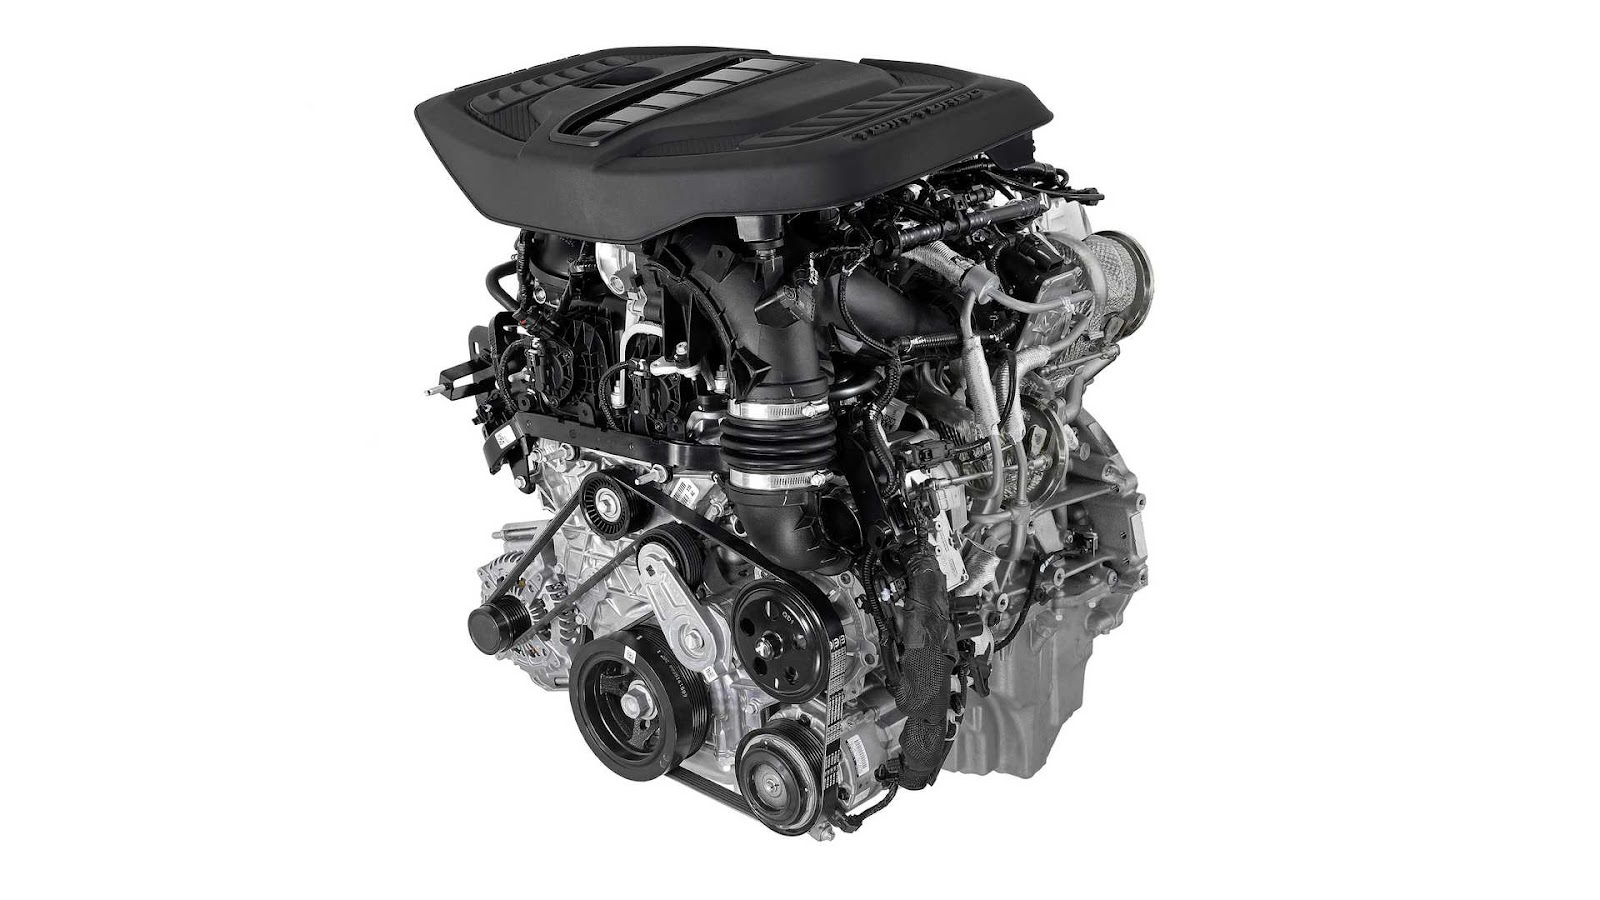 Jeep 發表動力強悍的新款 3.0 升直列六缸渦輪引擎